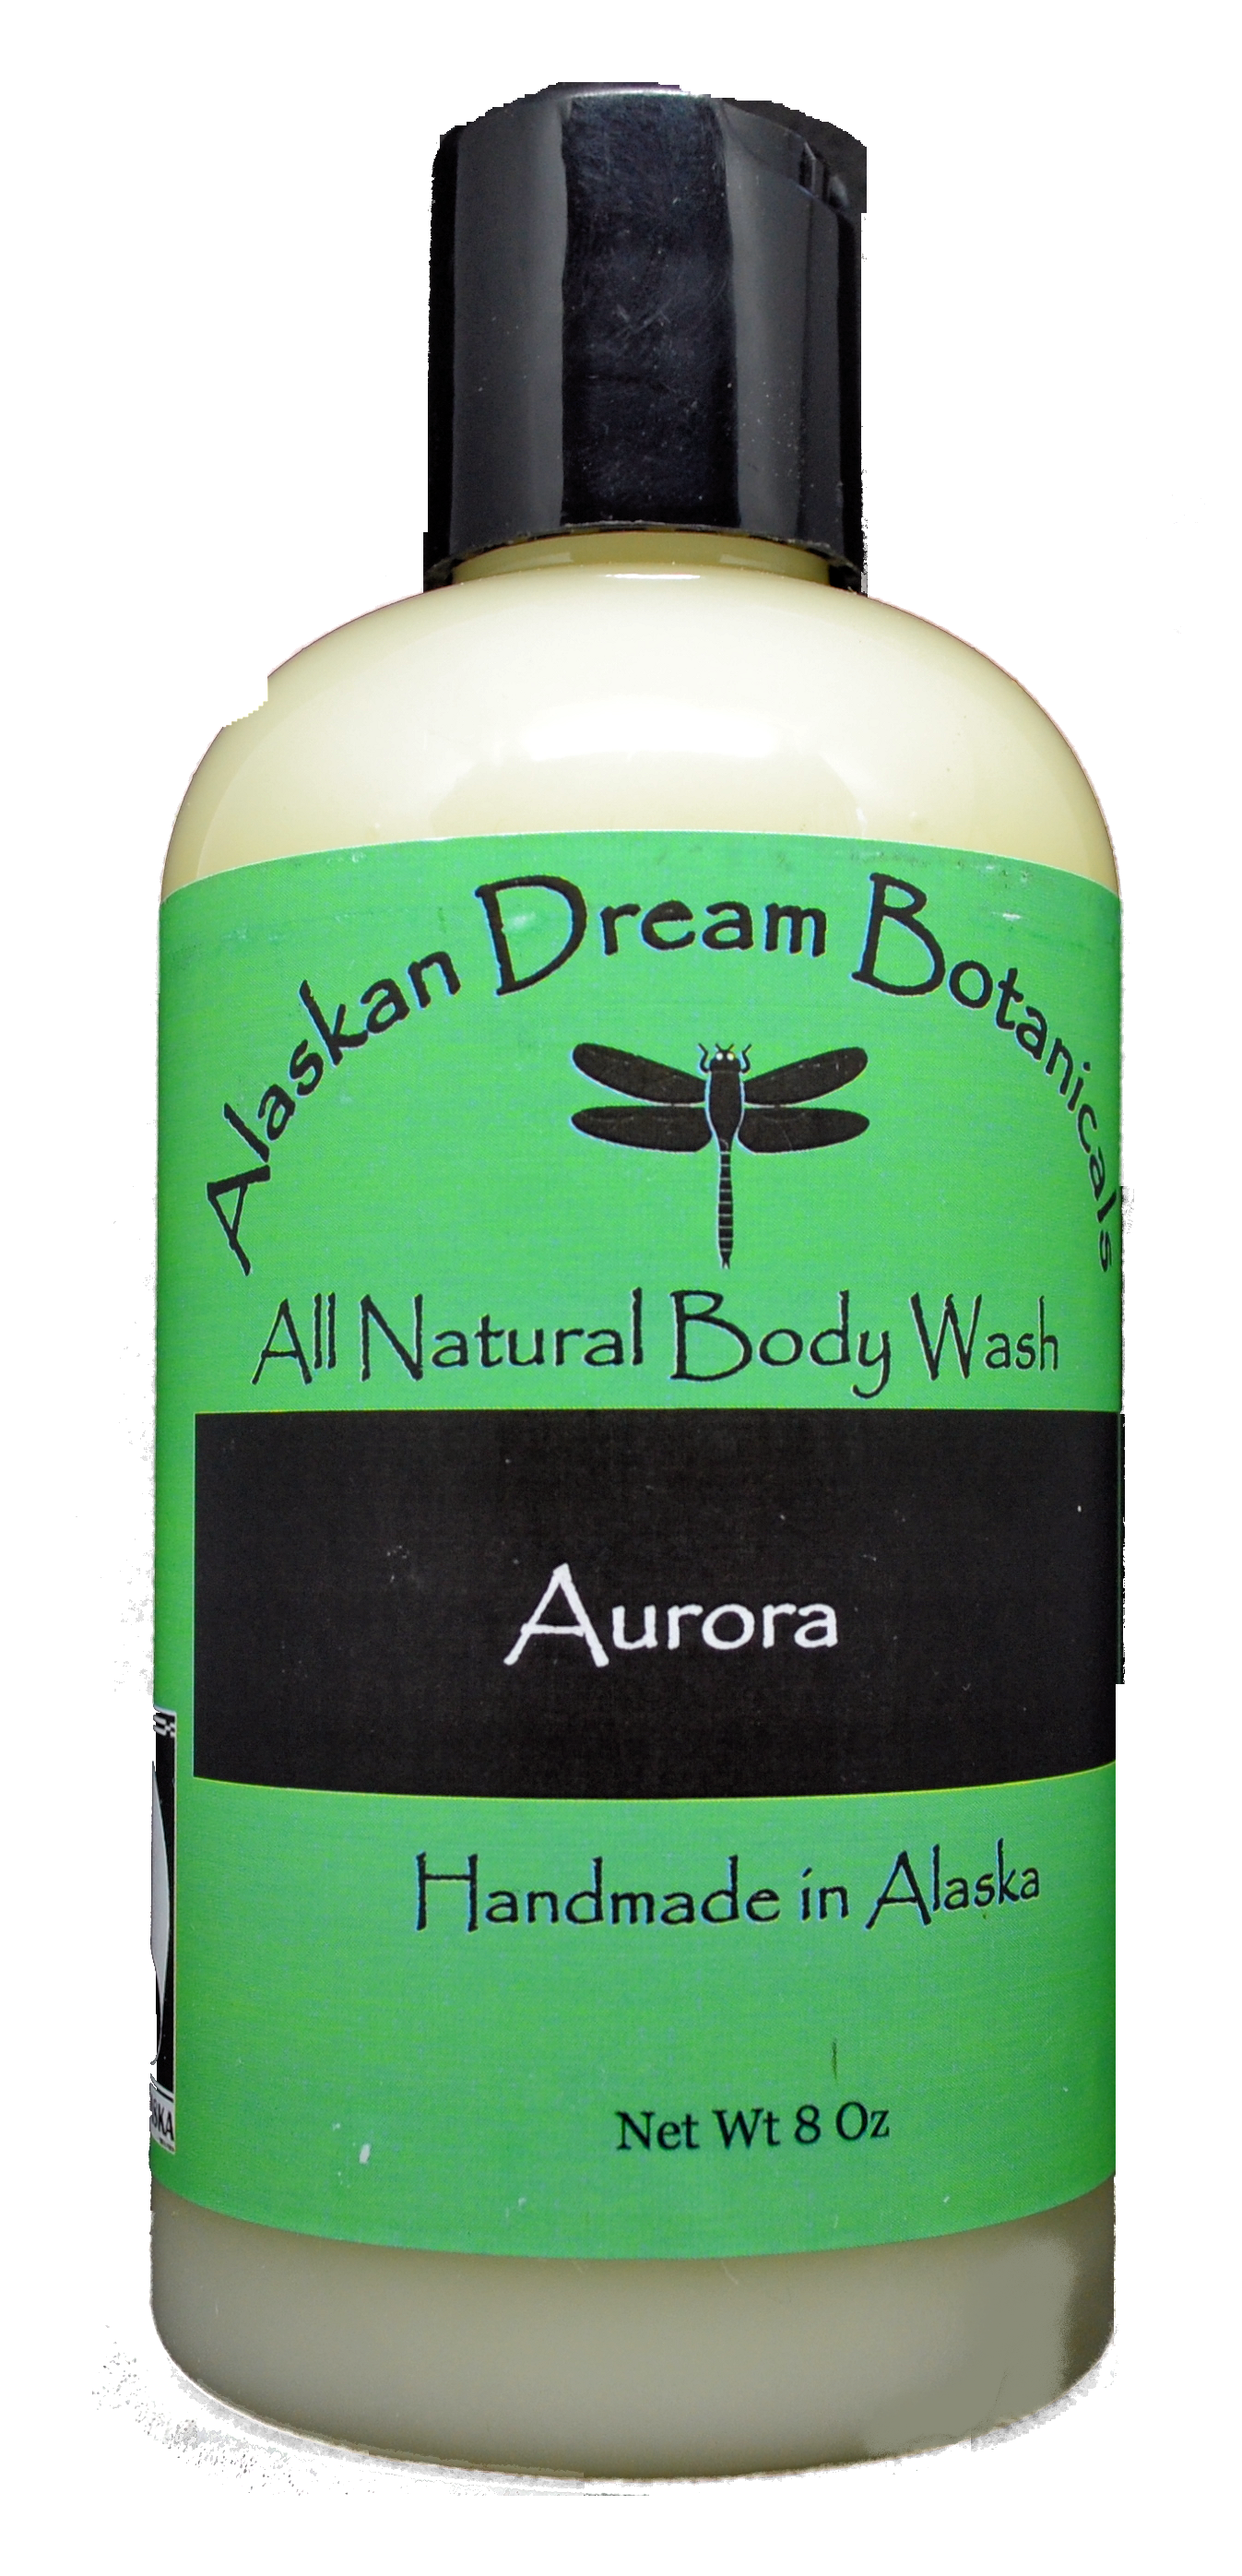 Aurora Everyday Body Wash - Alaskan Dream Botanicals